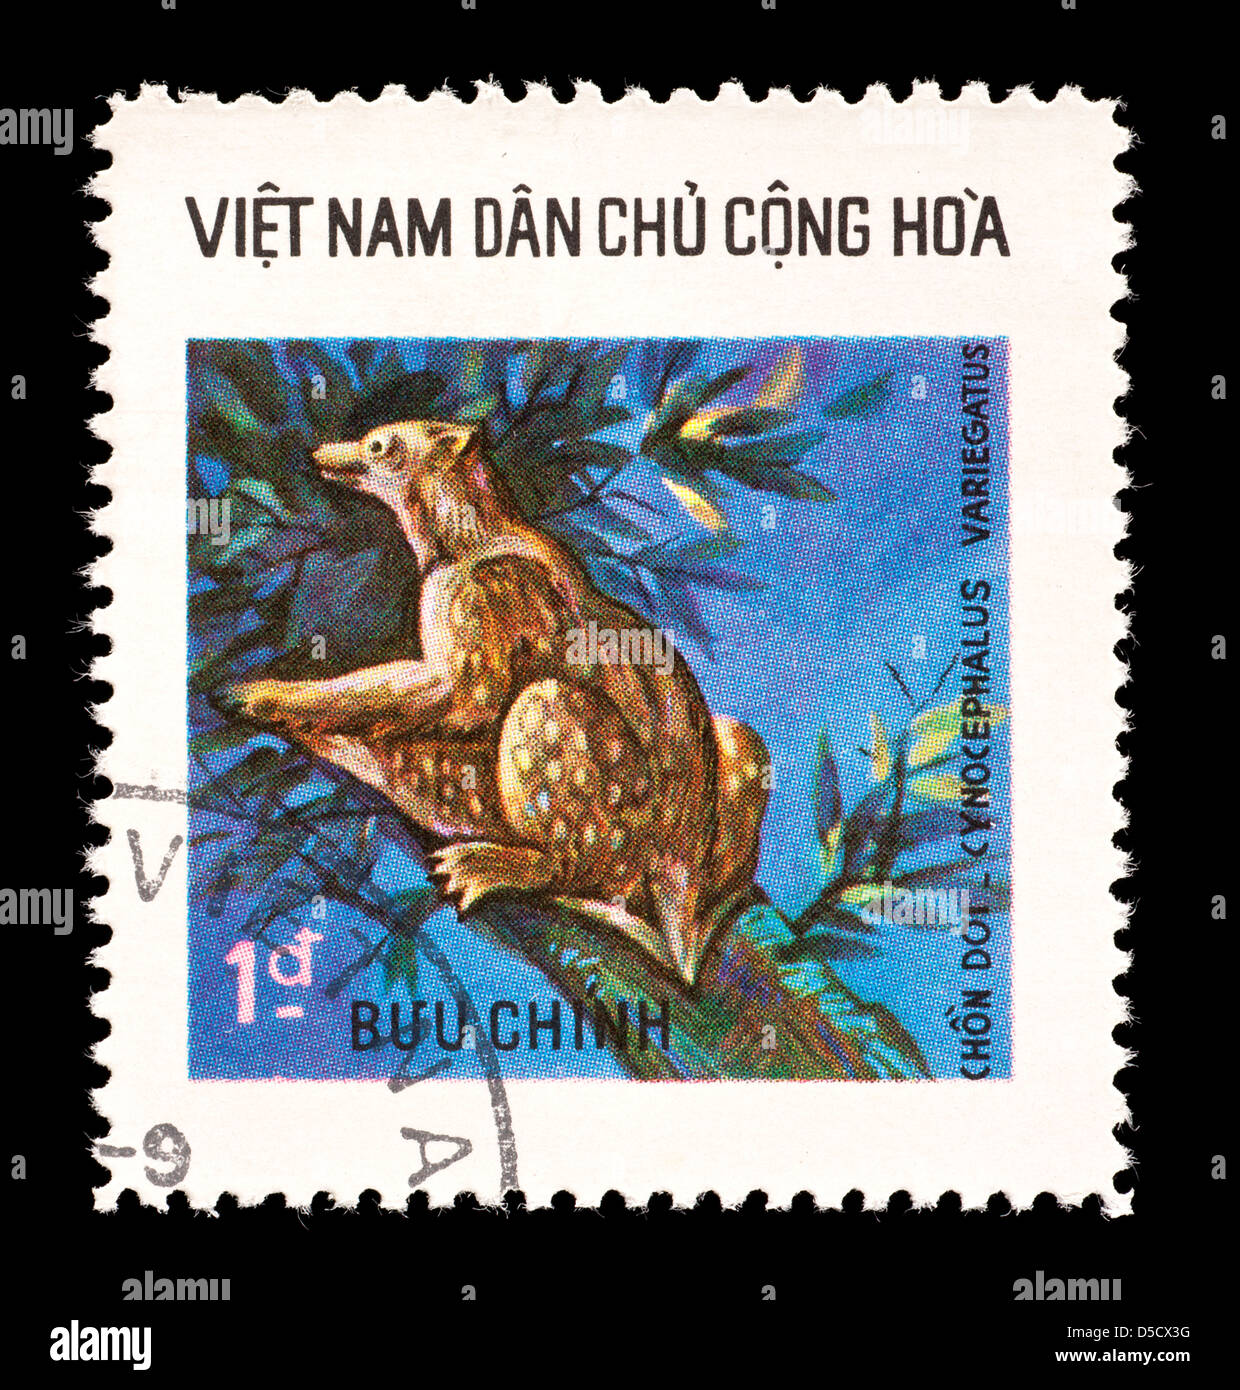 Postage stamp from Vietnam depicting a Sunda flying lemur (Cynocephalus variegatus). Stock Photo